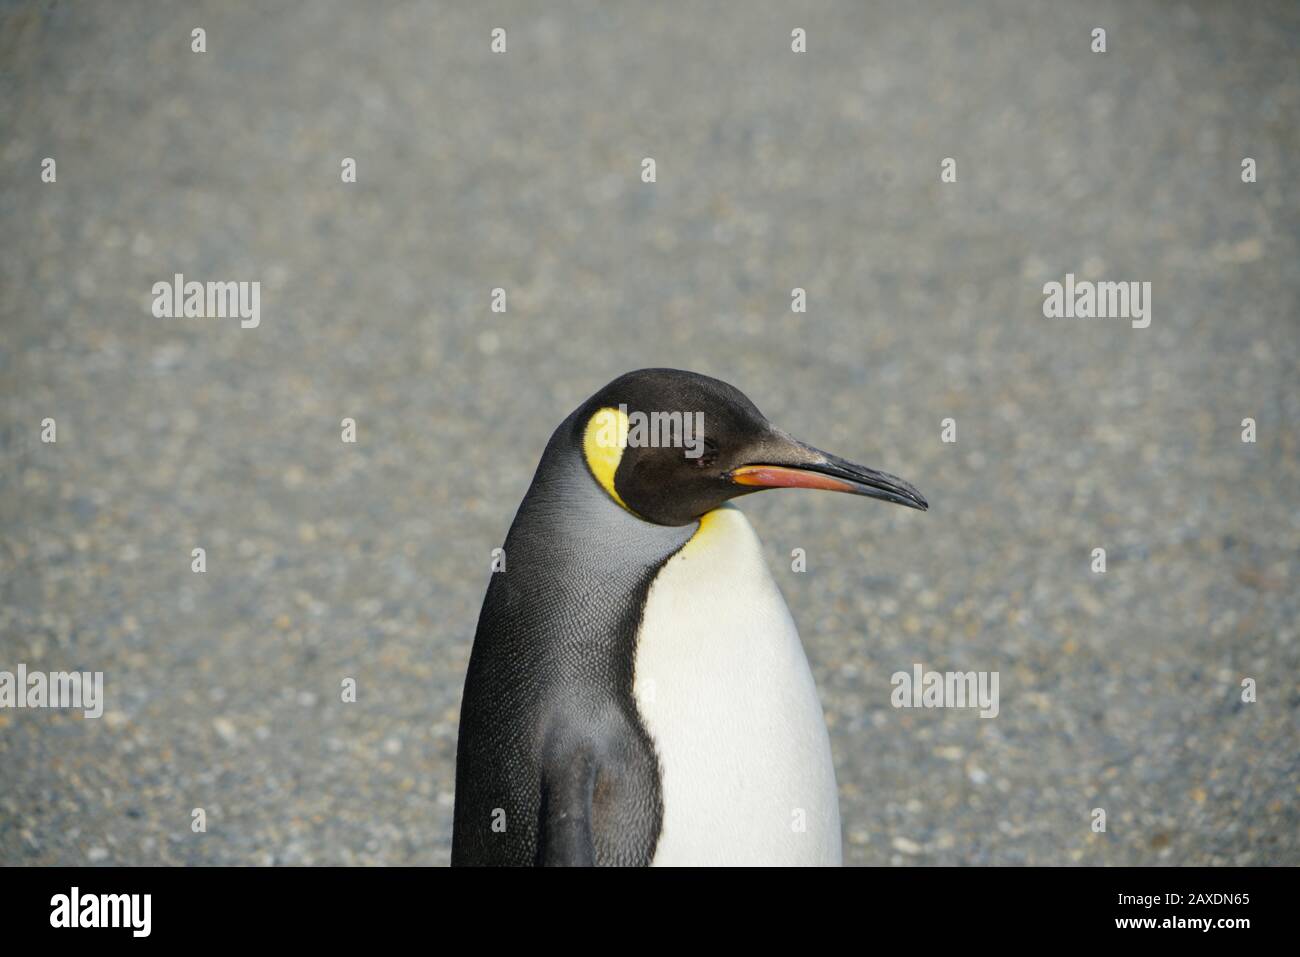 King penguins of South Georgia Stock Photo